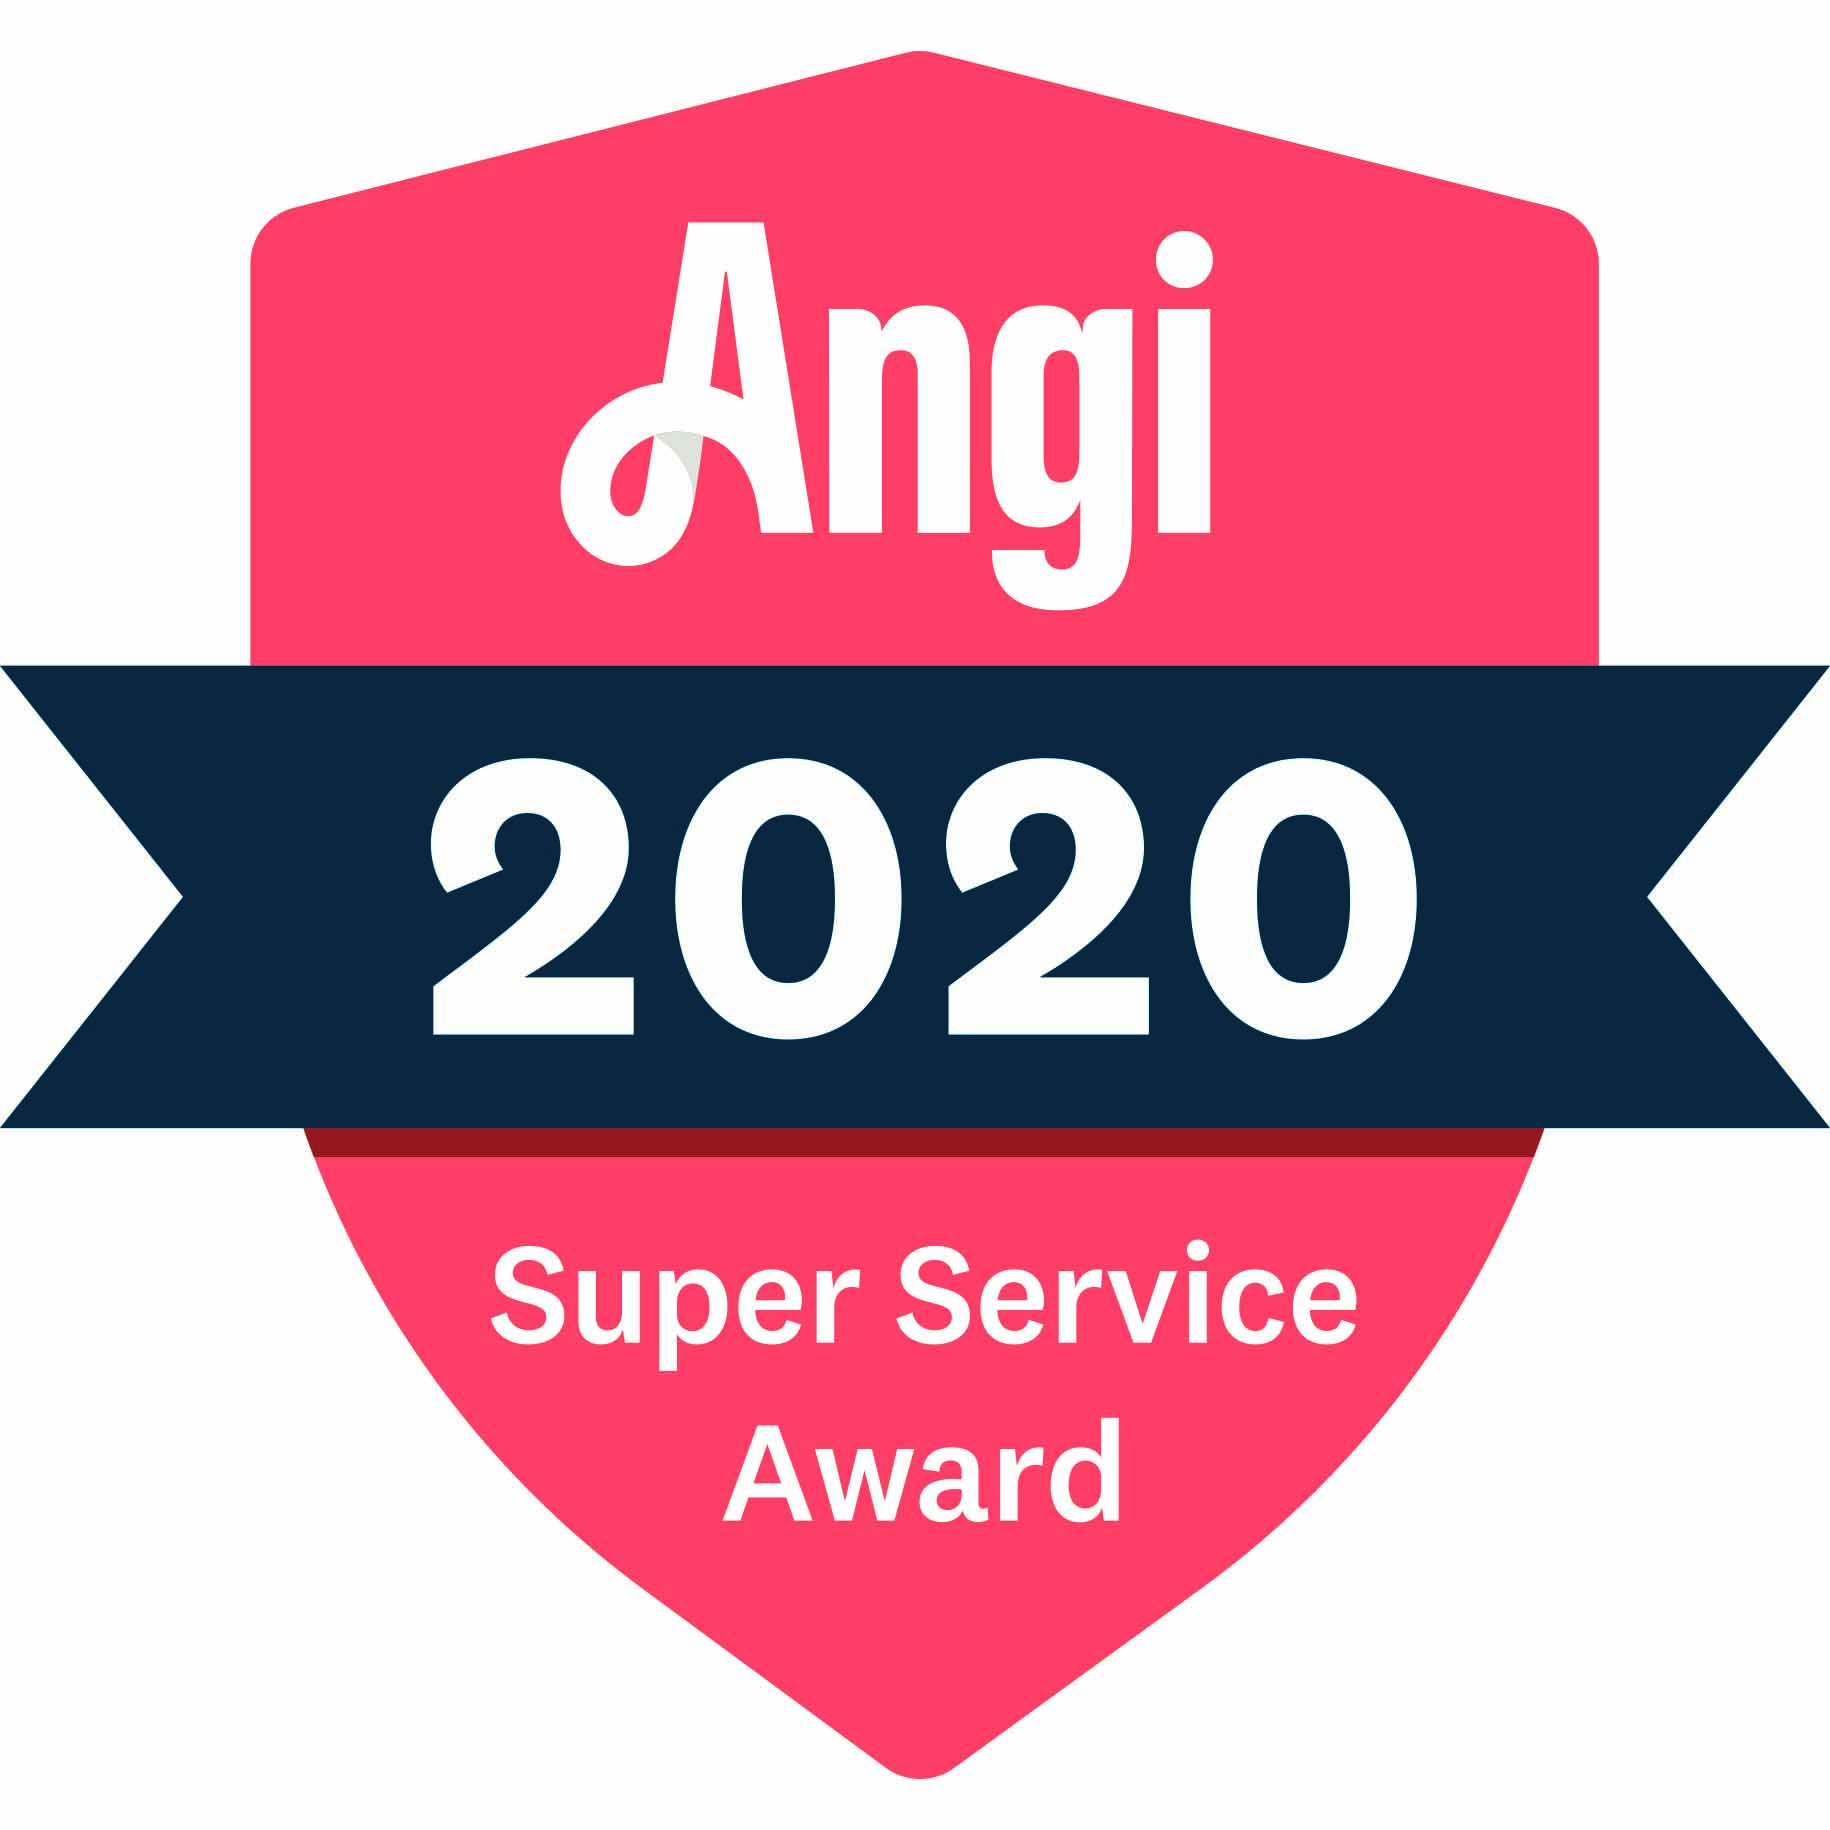 Anji Super Service Award Image